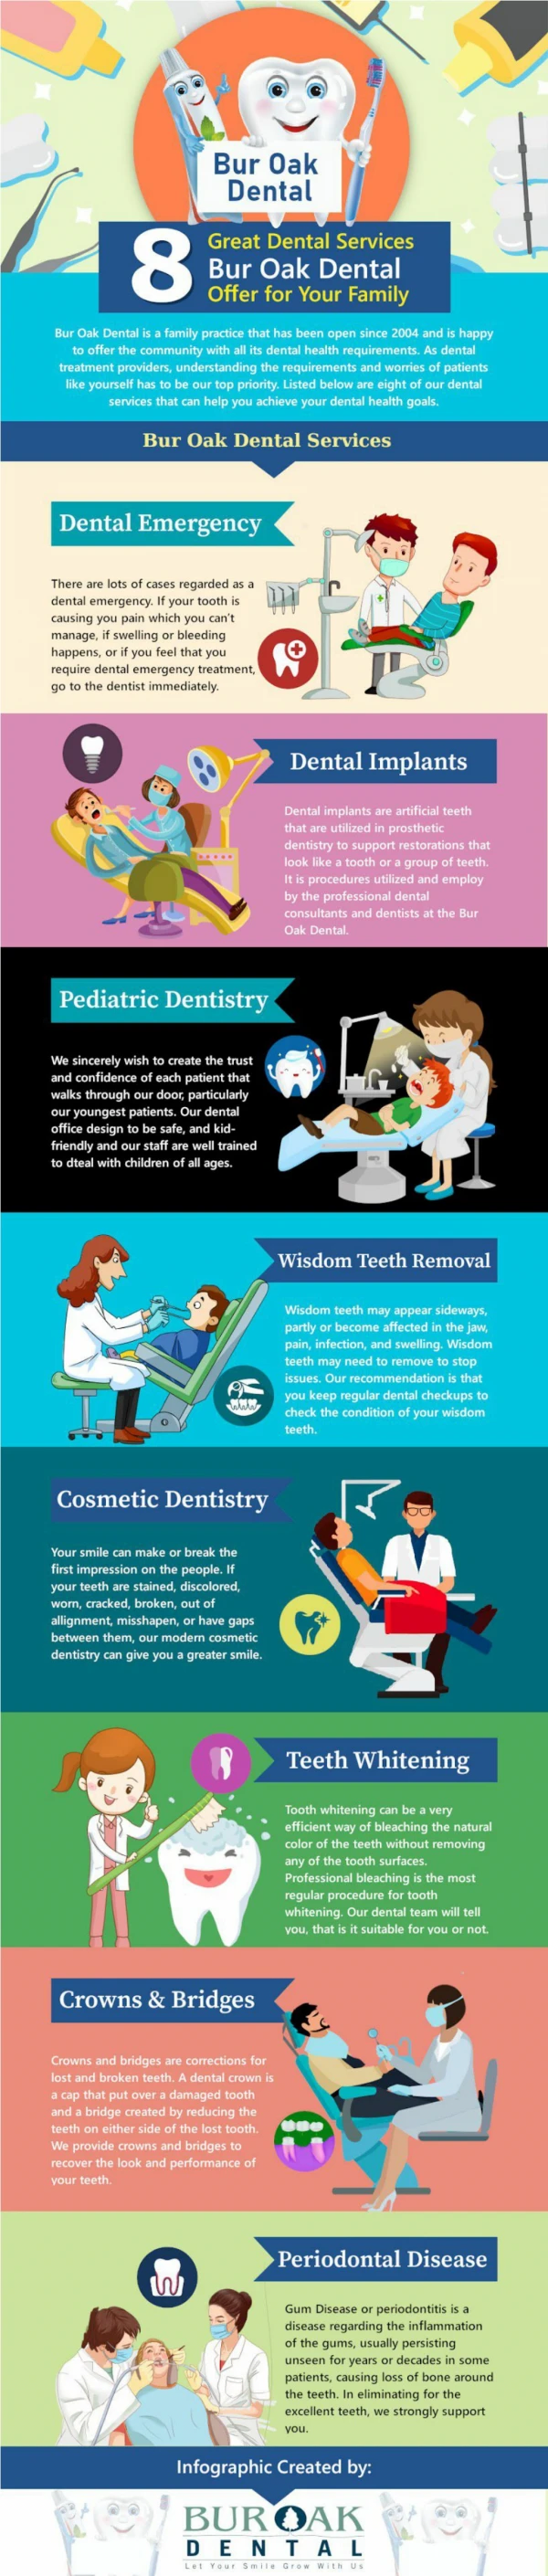 8 Great Dental Services Bur Oak Dental Offer for Your Family [Infographic]